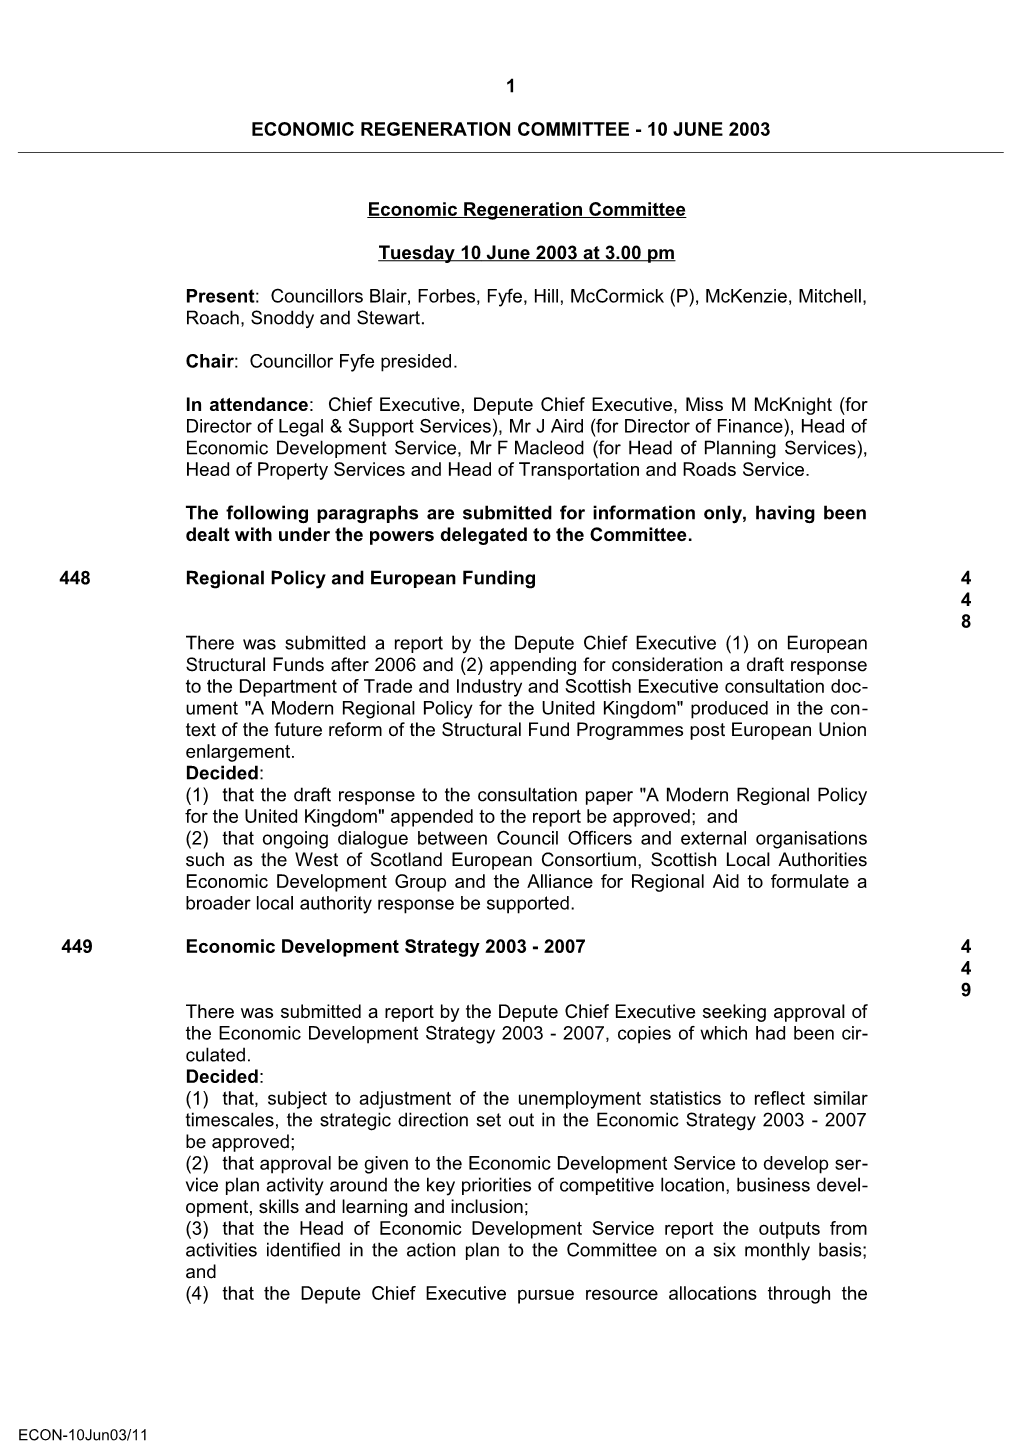 Economic Regeneration Committee - 10 June 2003